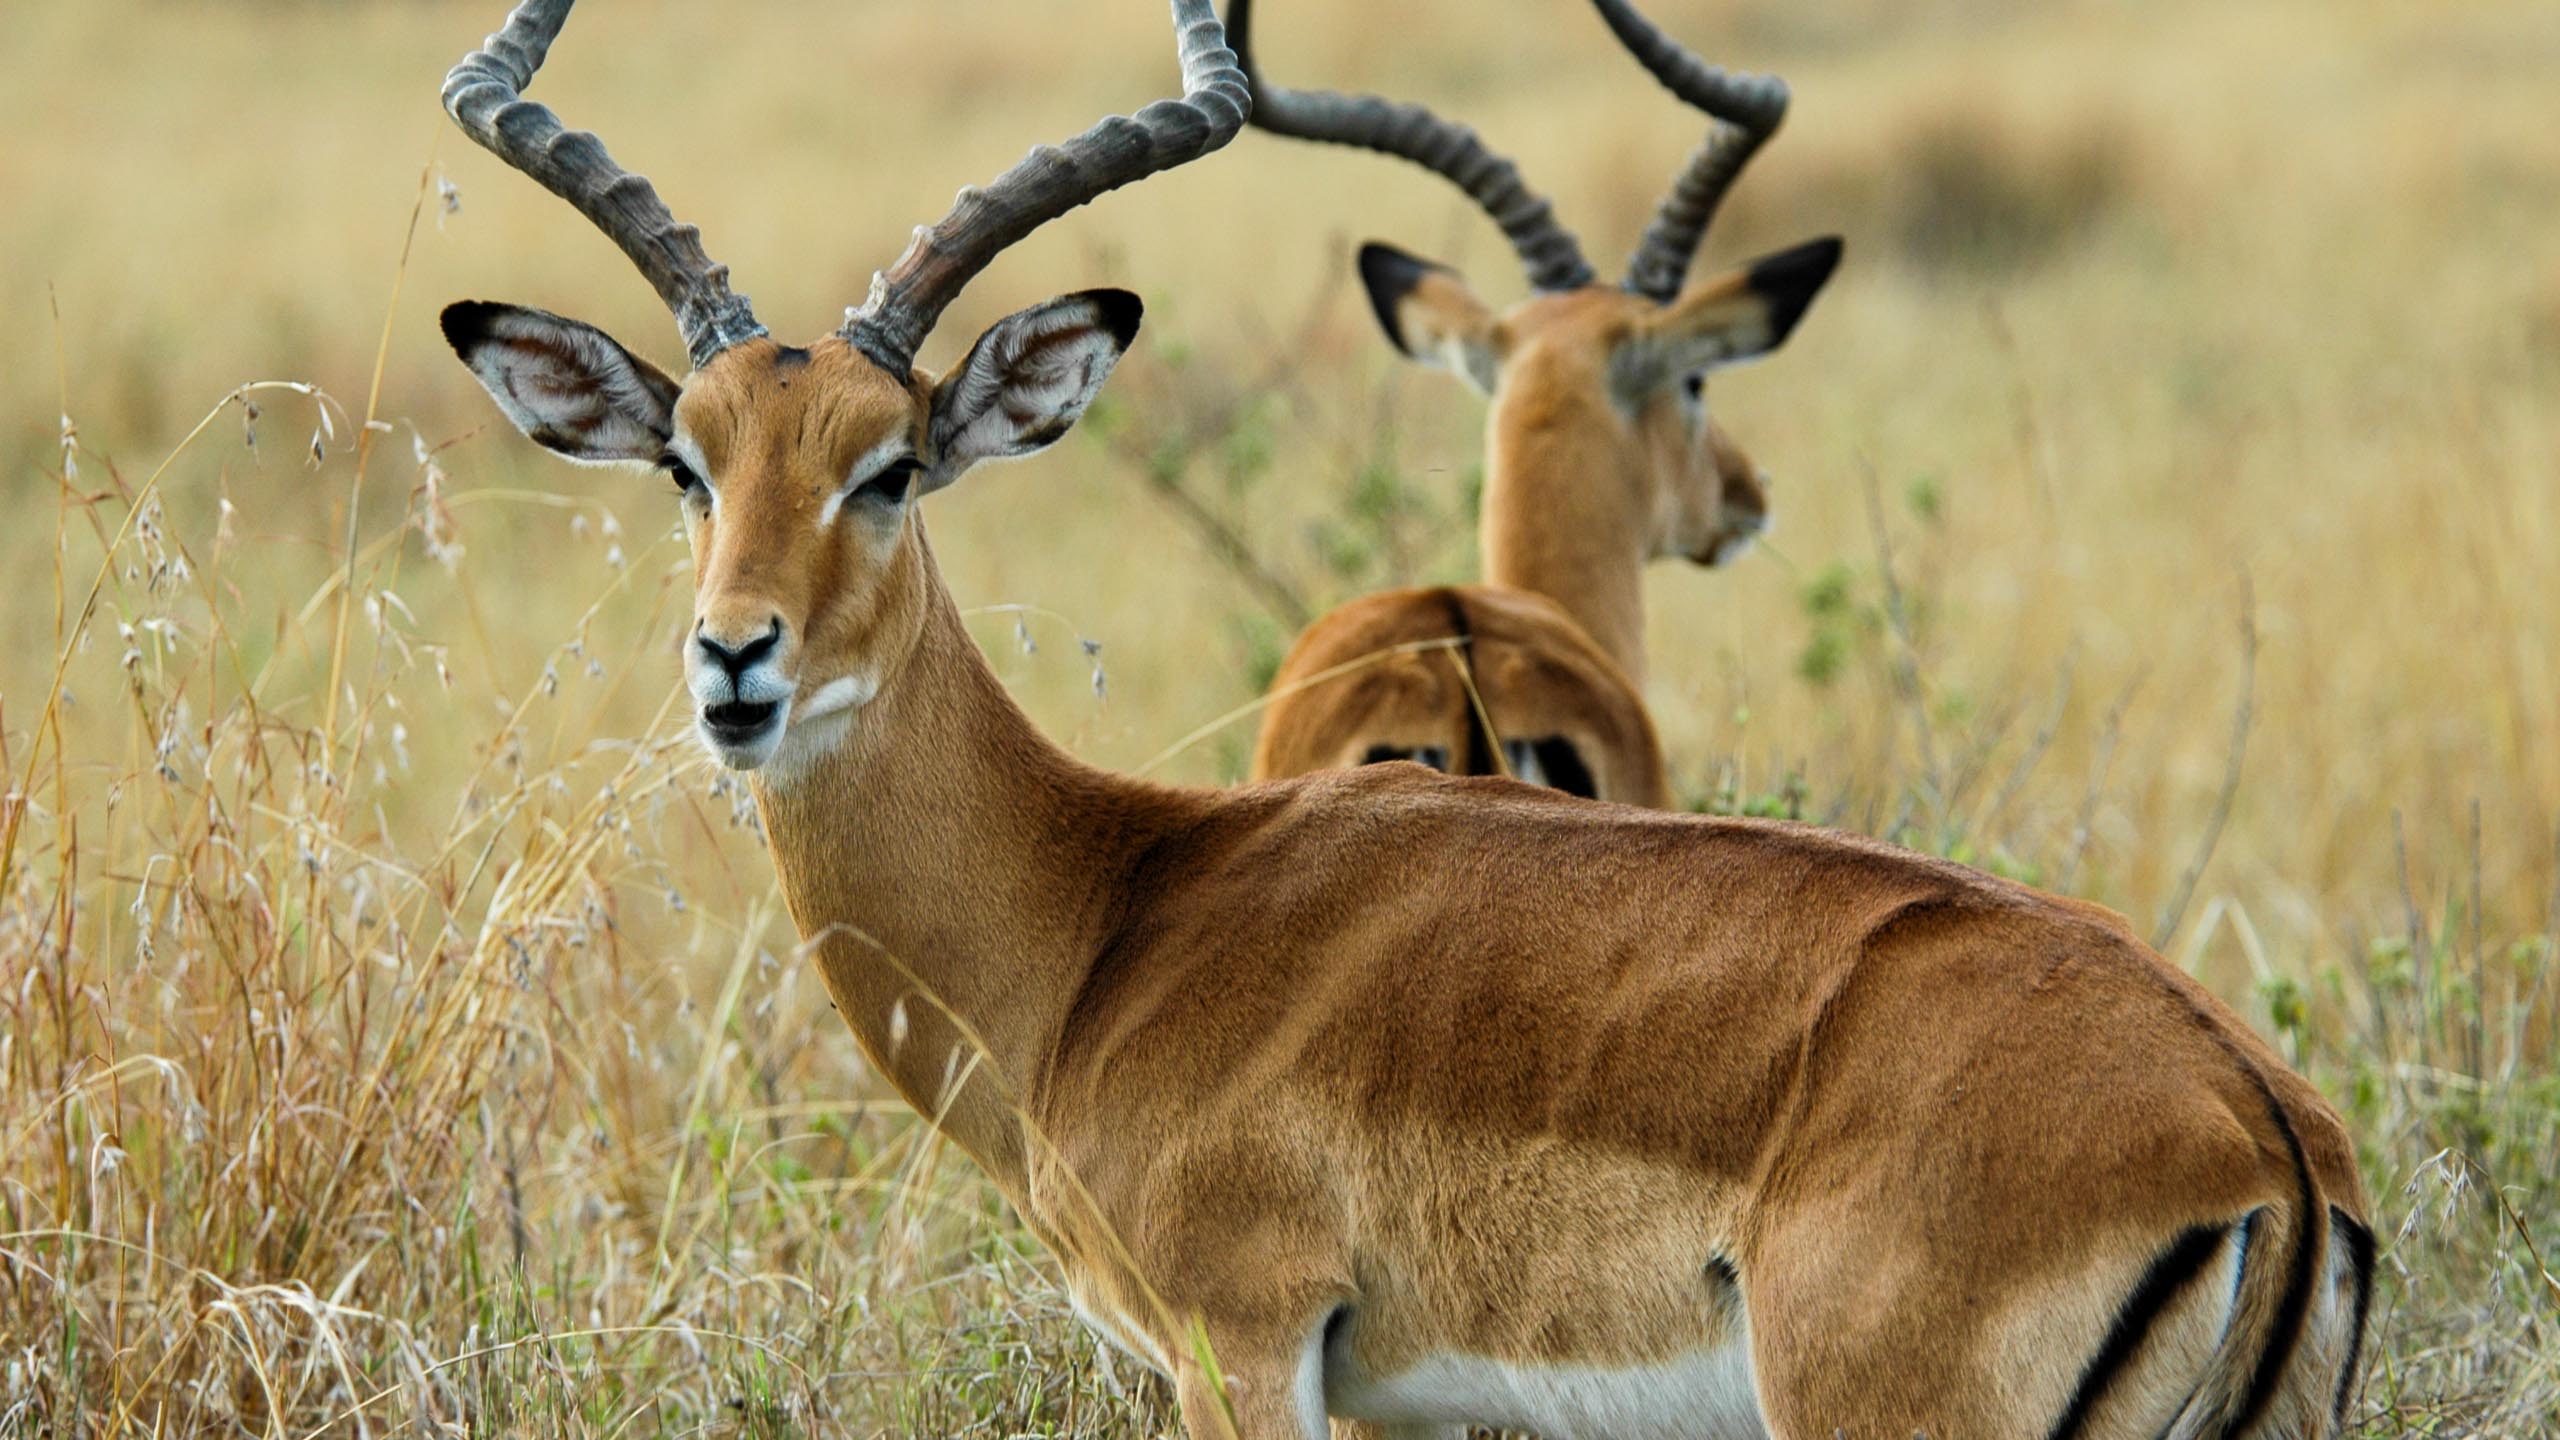 Close up of antelope in Kenya